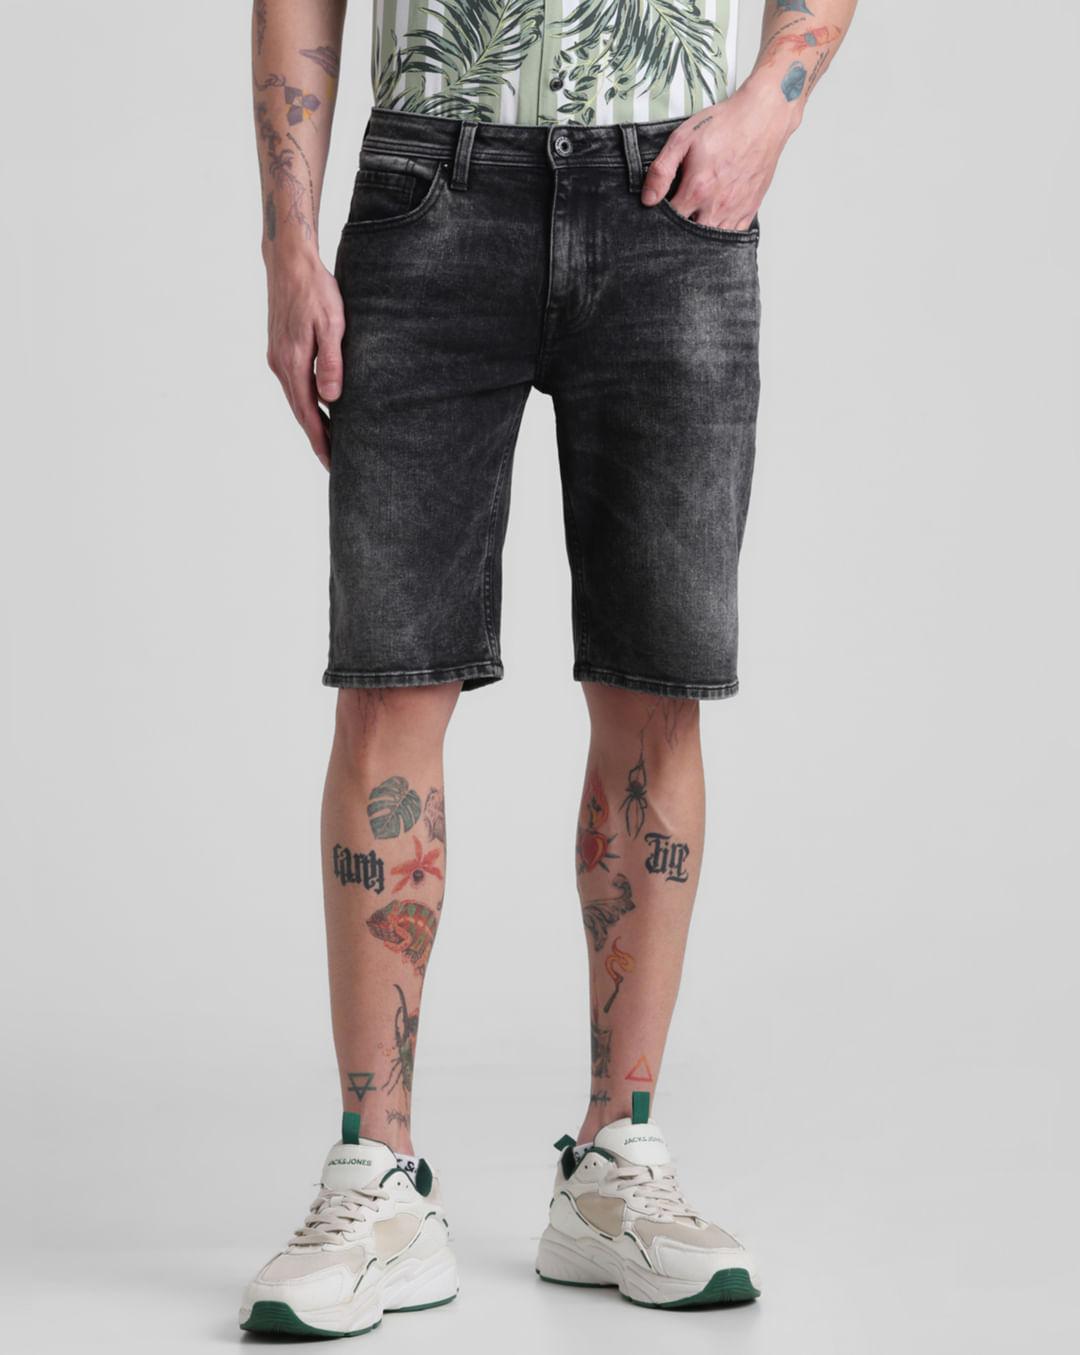 black-low-rise-washed-denim-shorts